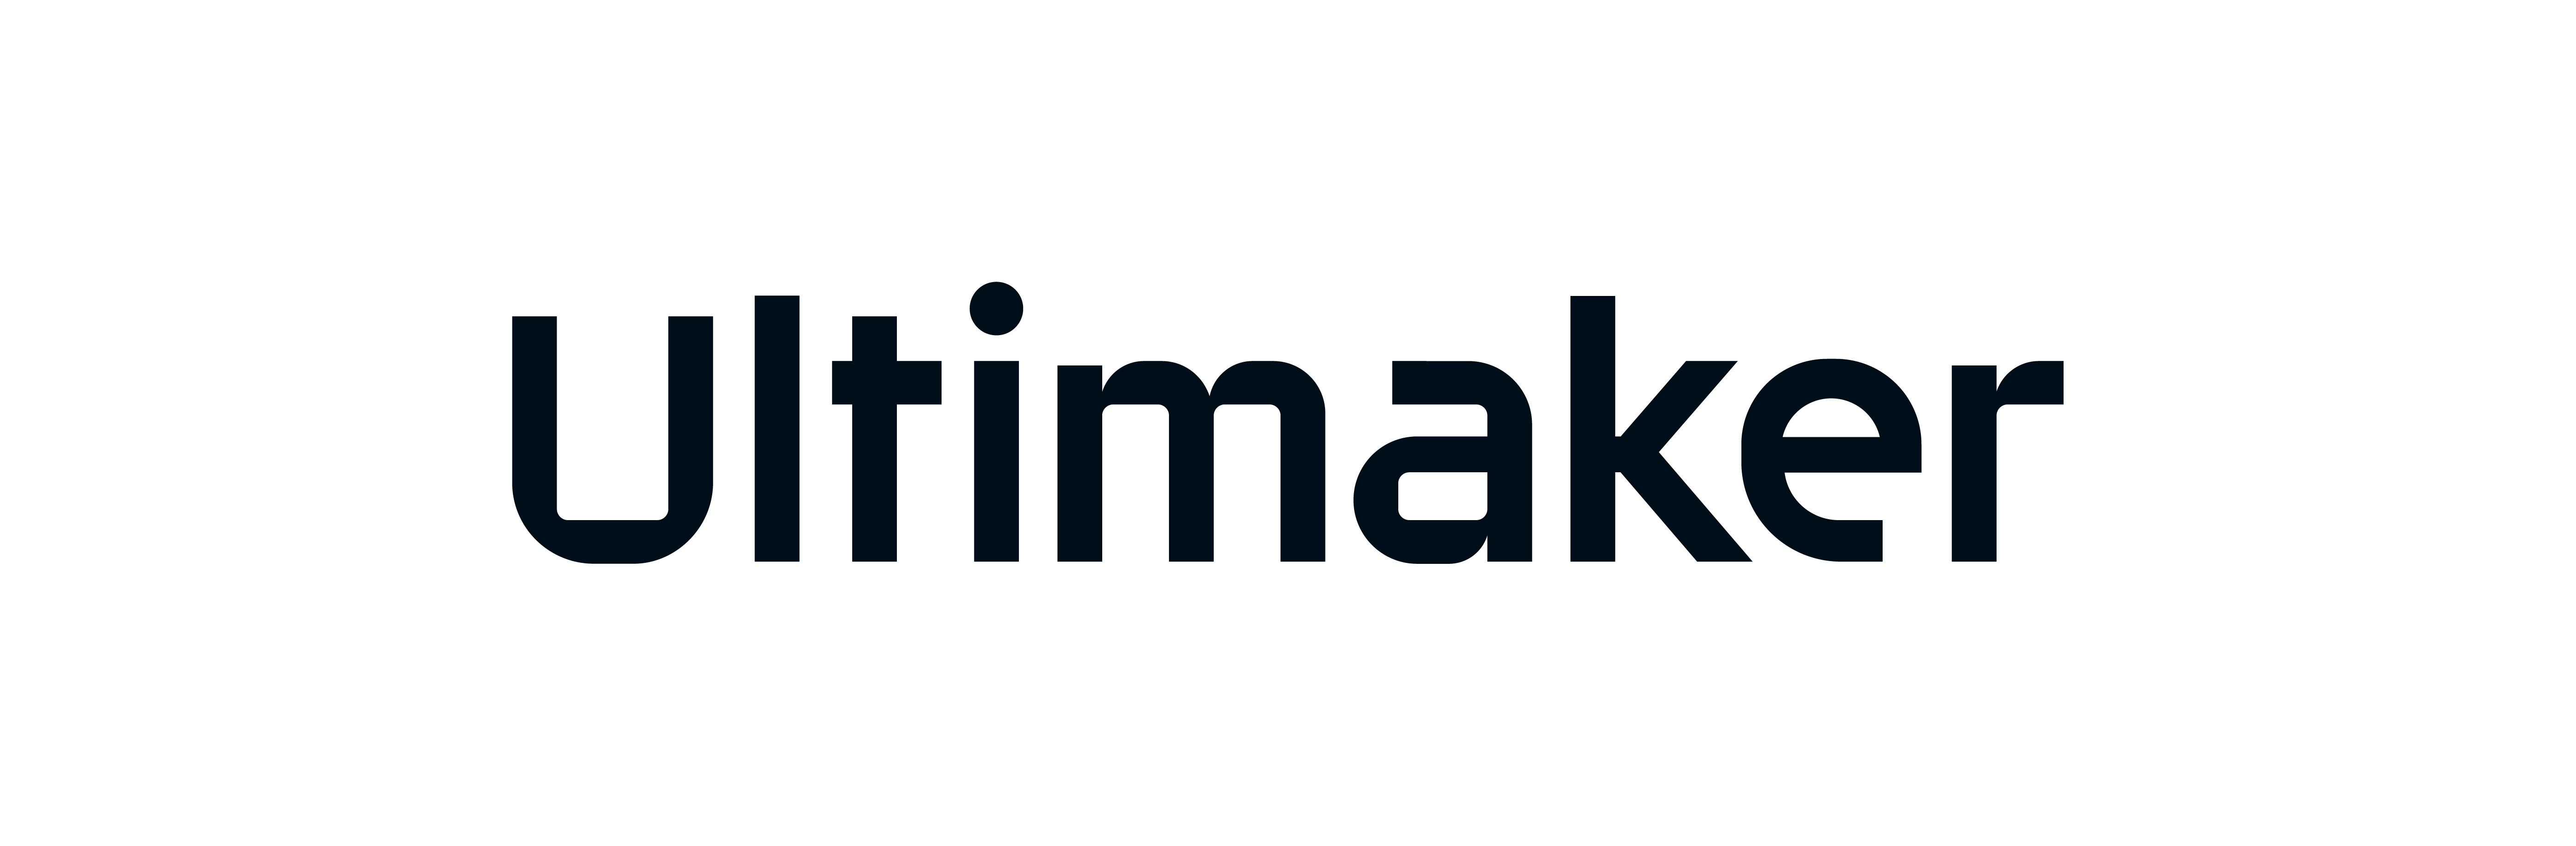 The new Ultimaker logo. Image via Ultimaker.